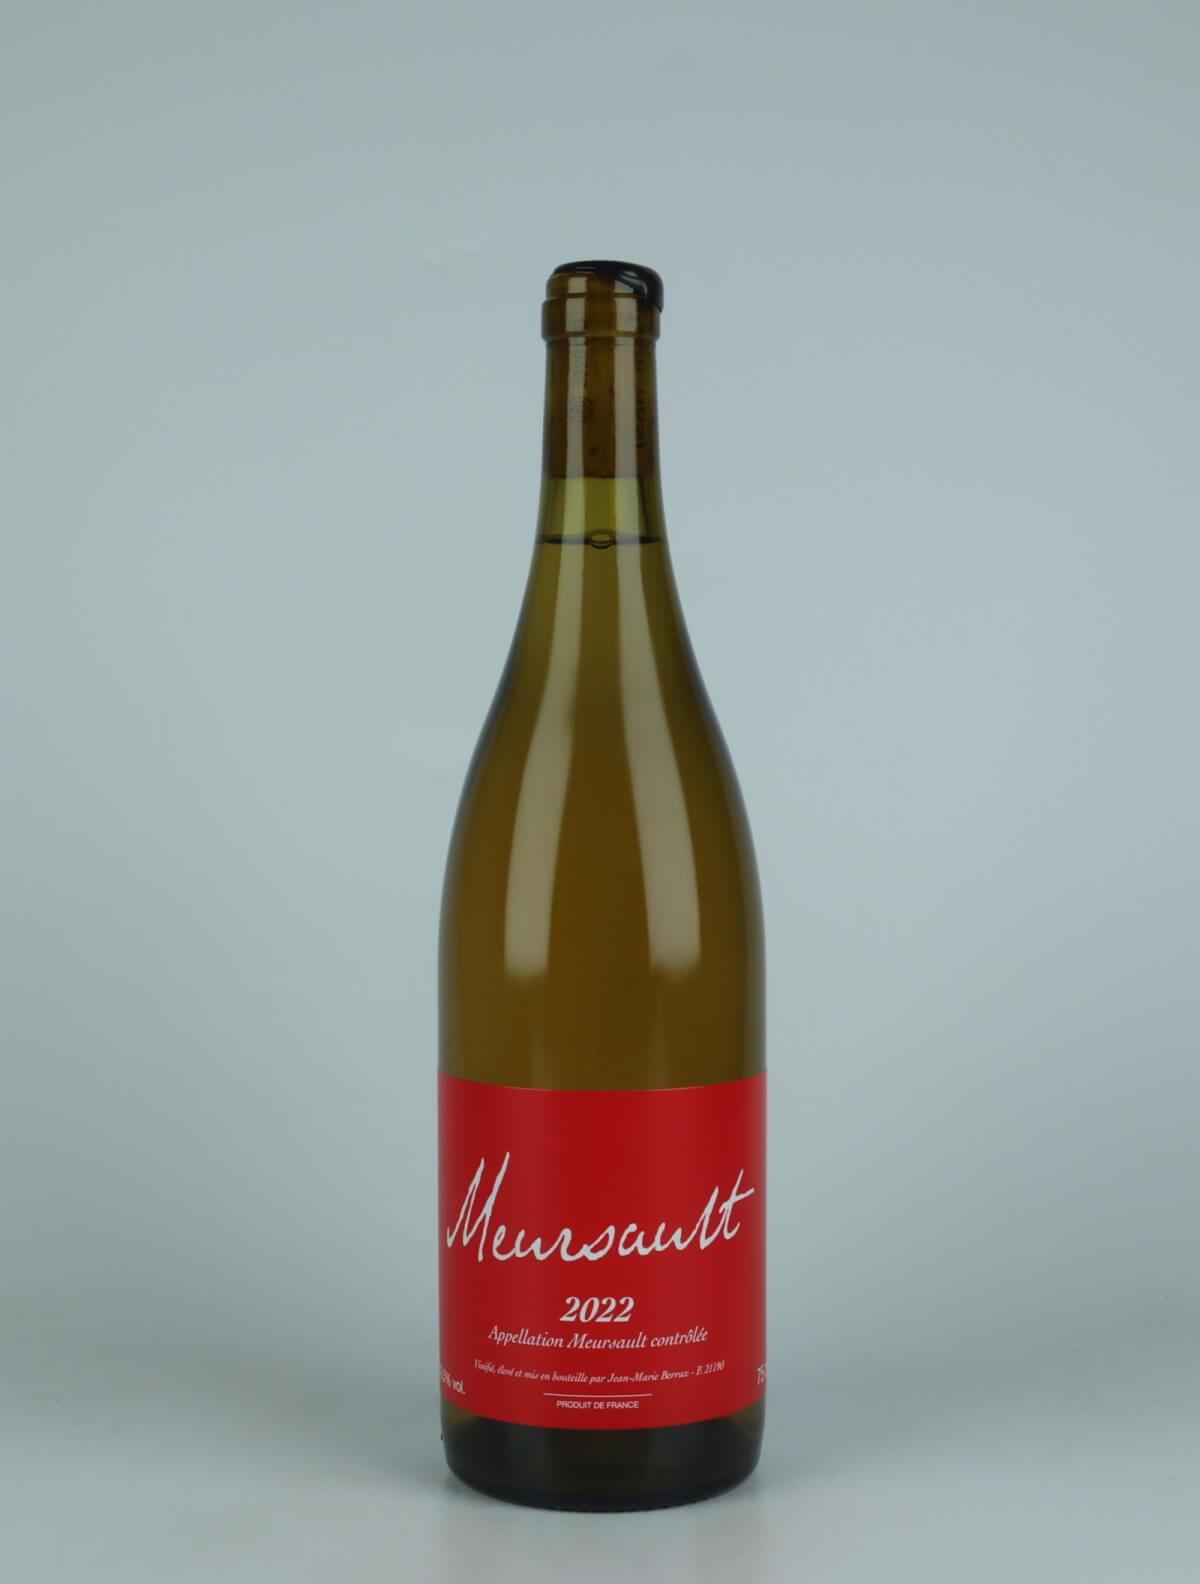 A bottle 2022 Meursault White wine from Jean-Marie Berrux, Burgundy in France